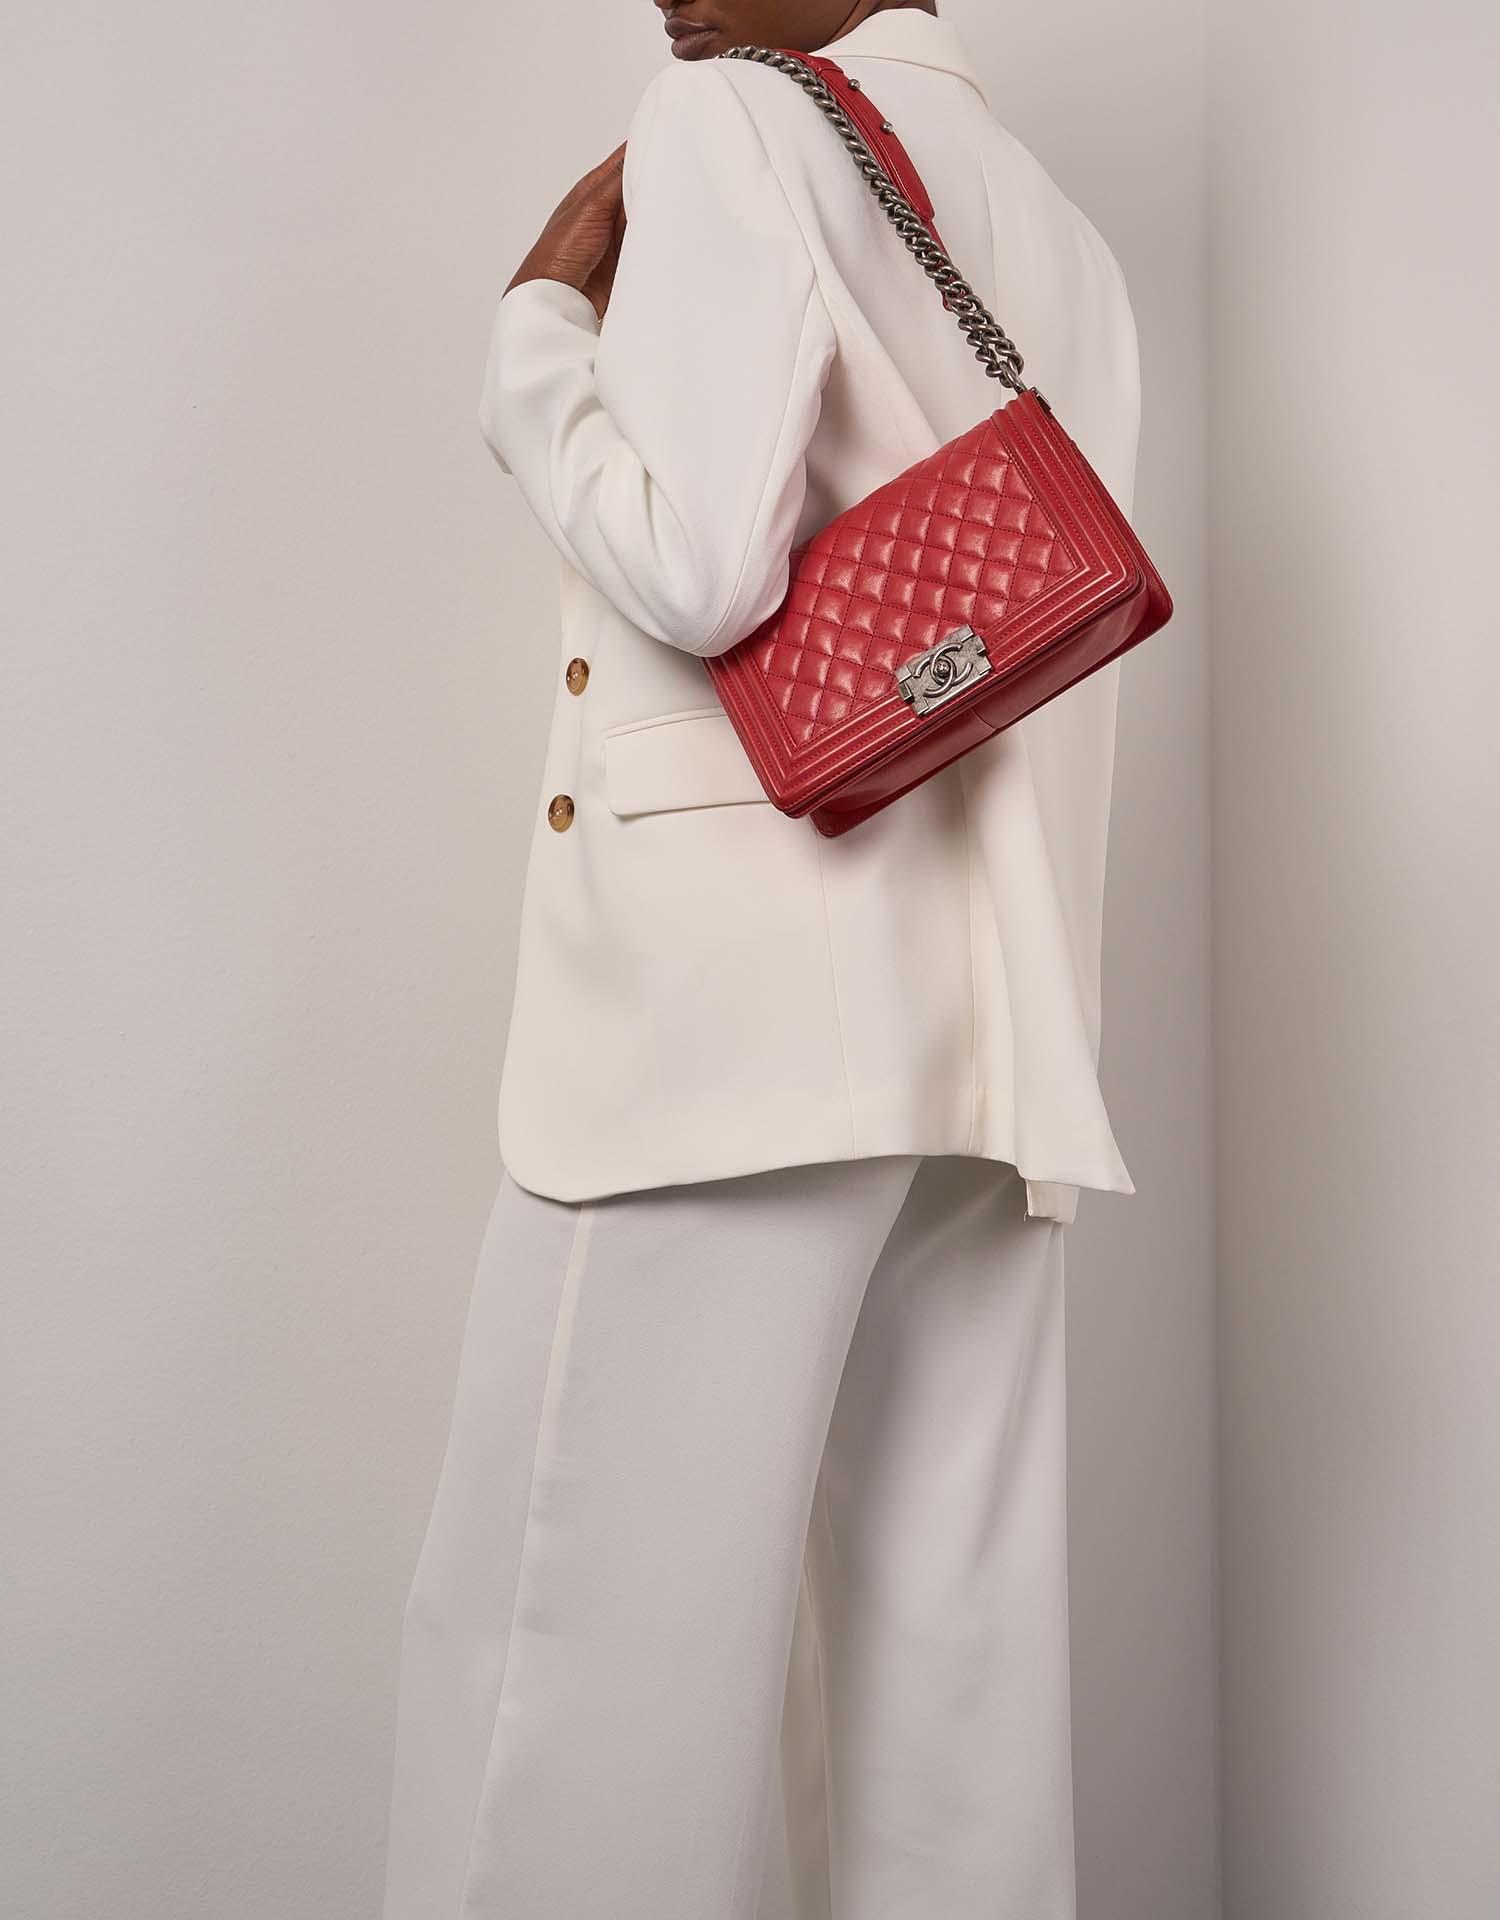 Chanel Boy OldMedium Red 1M | Sell your designer bag on Saclab.com